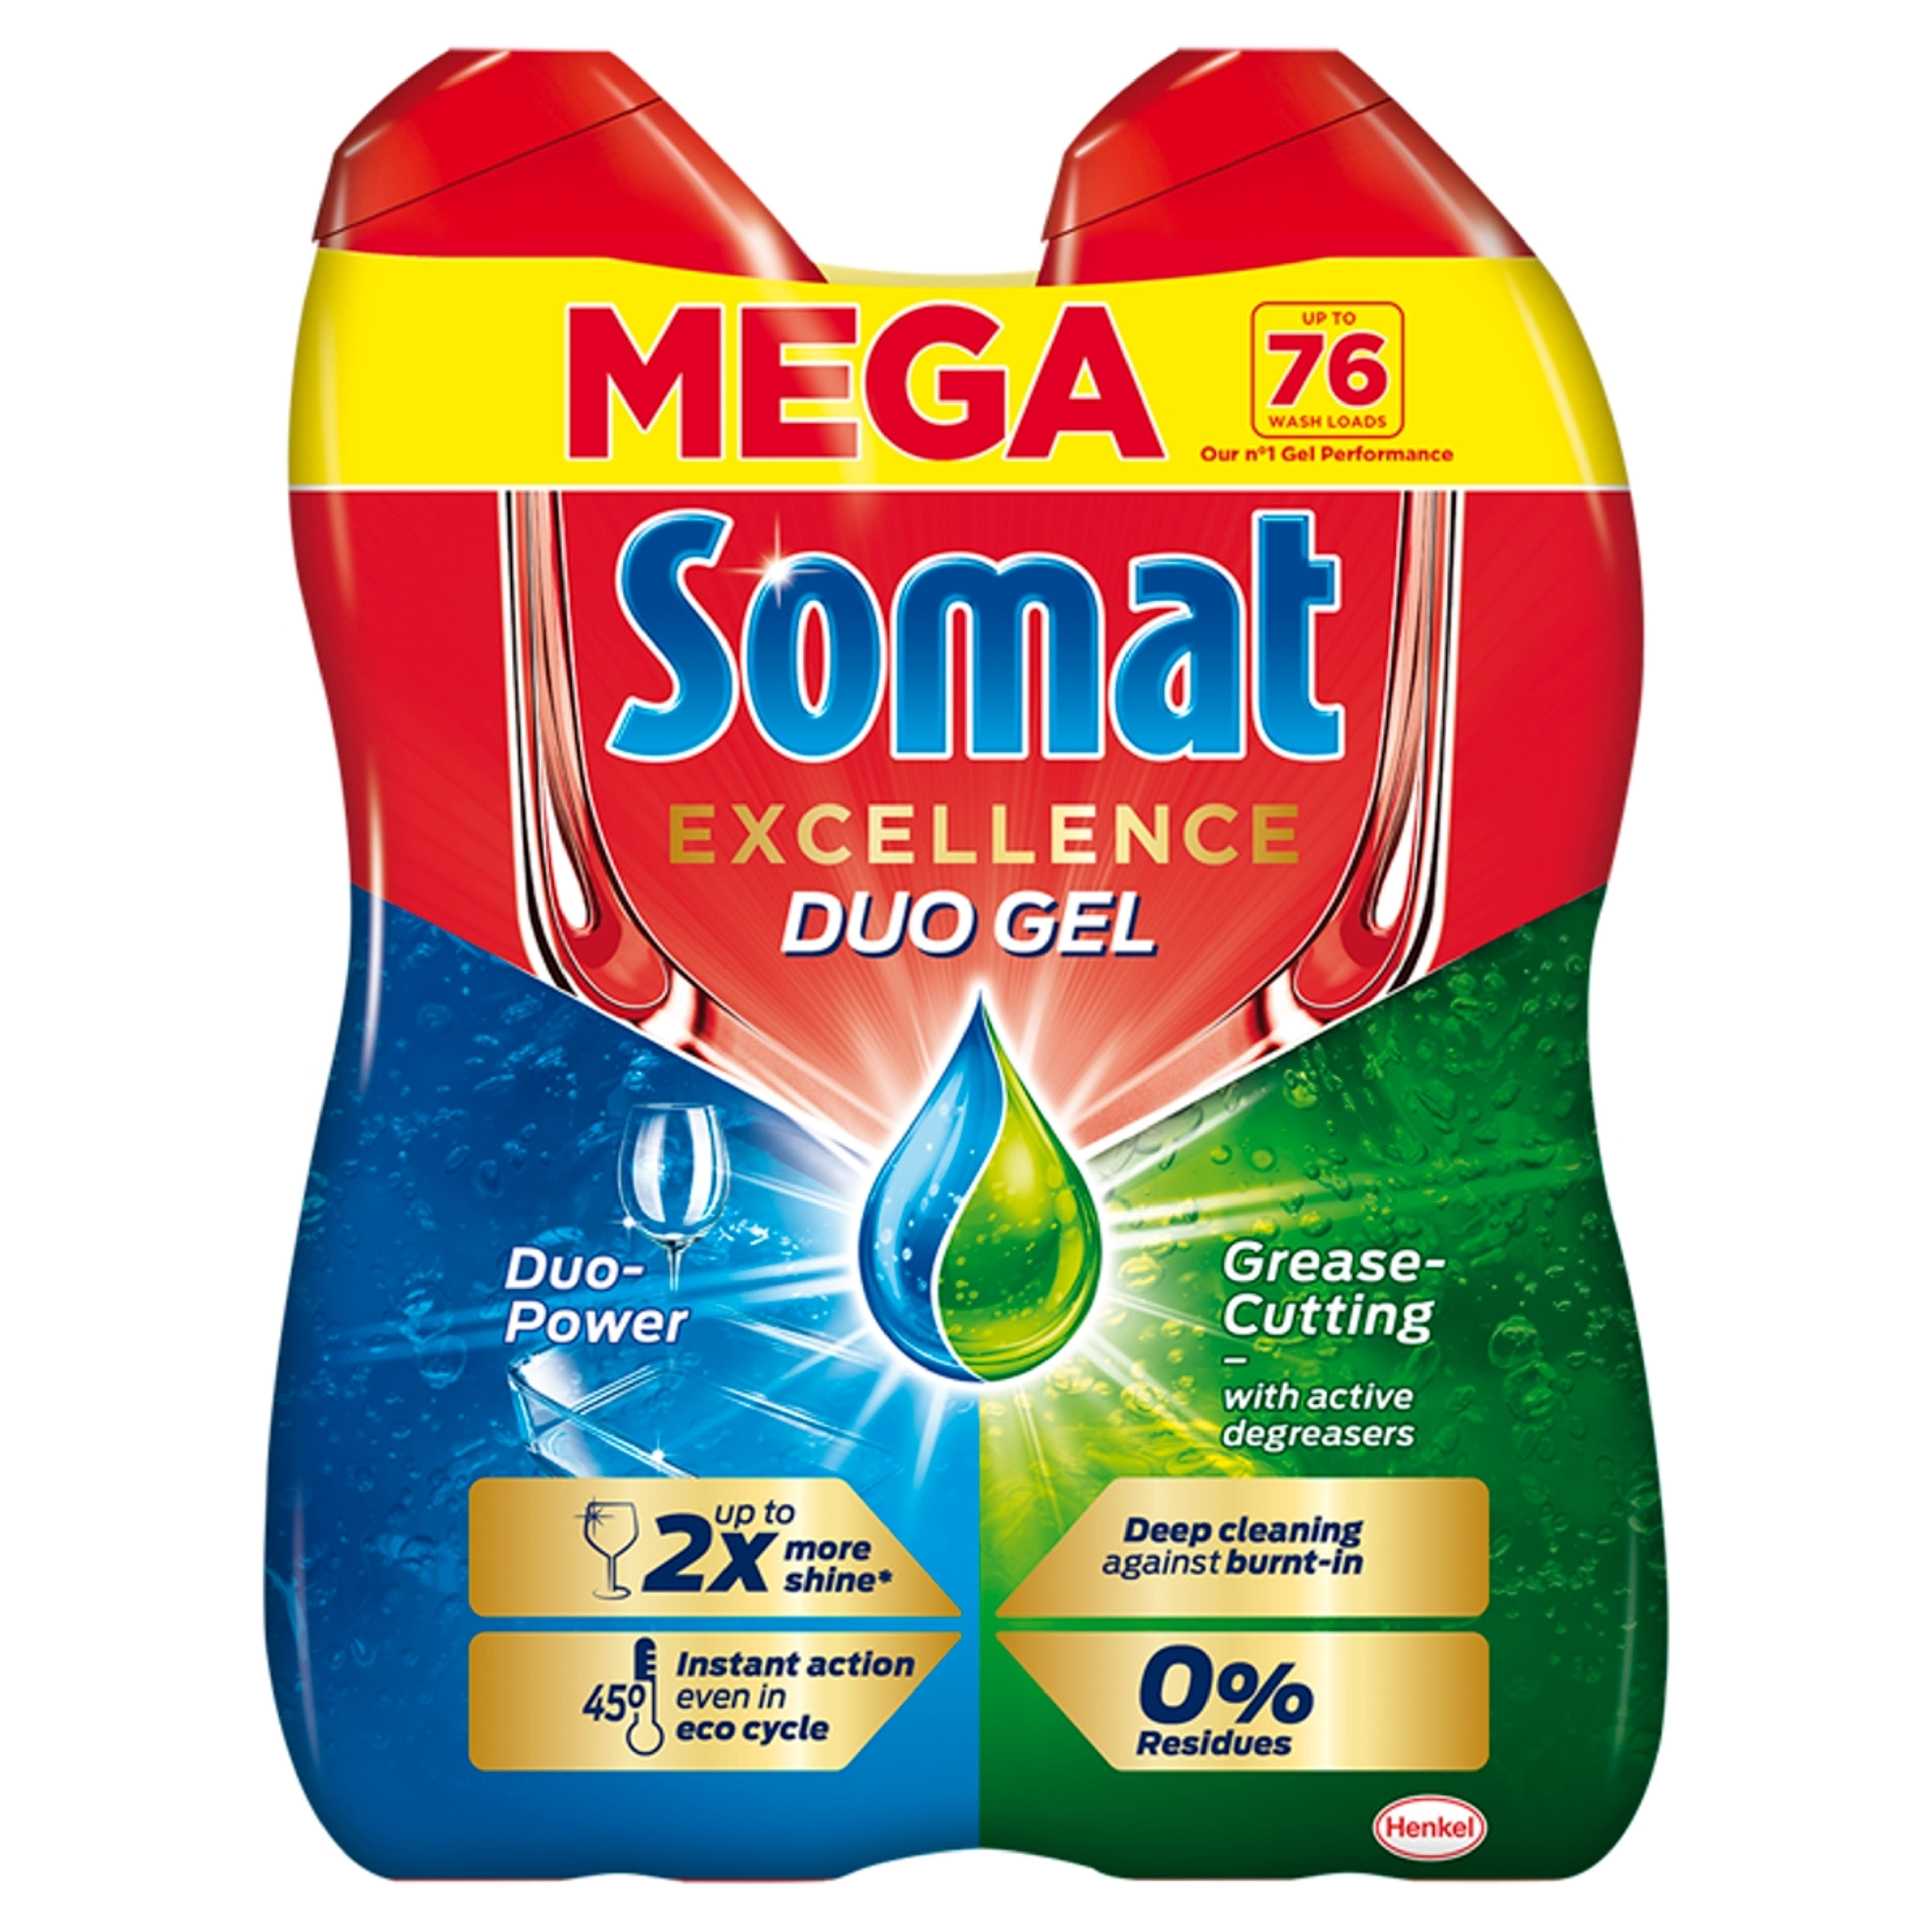 Somat Excellence Duo Gel Grease Cutting mosogatógél, 76 mosás (2x684 ml) - 1368 ml-1